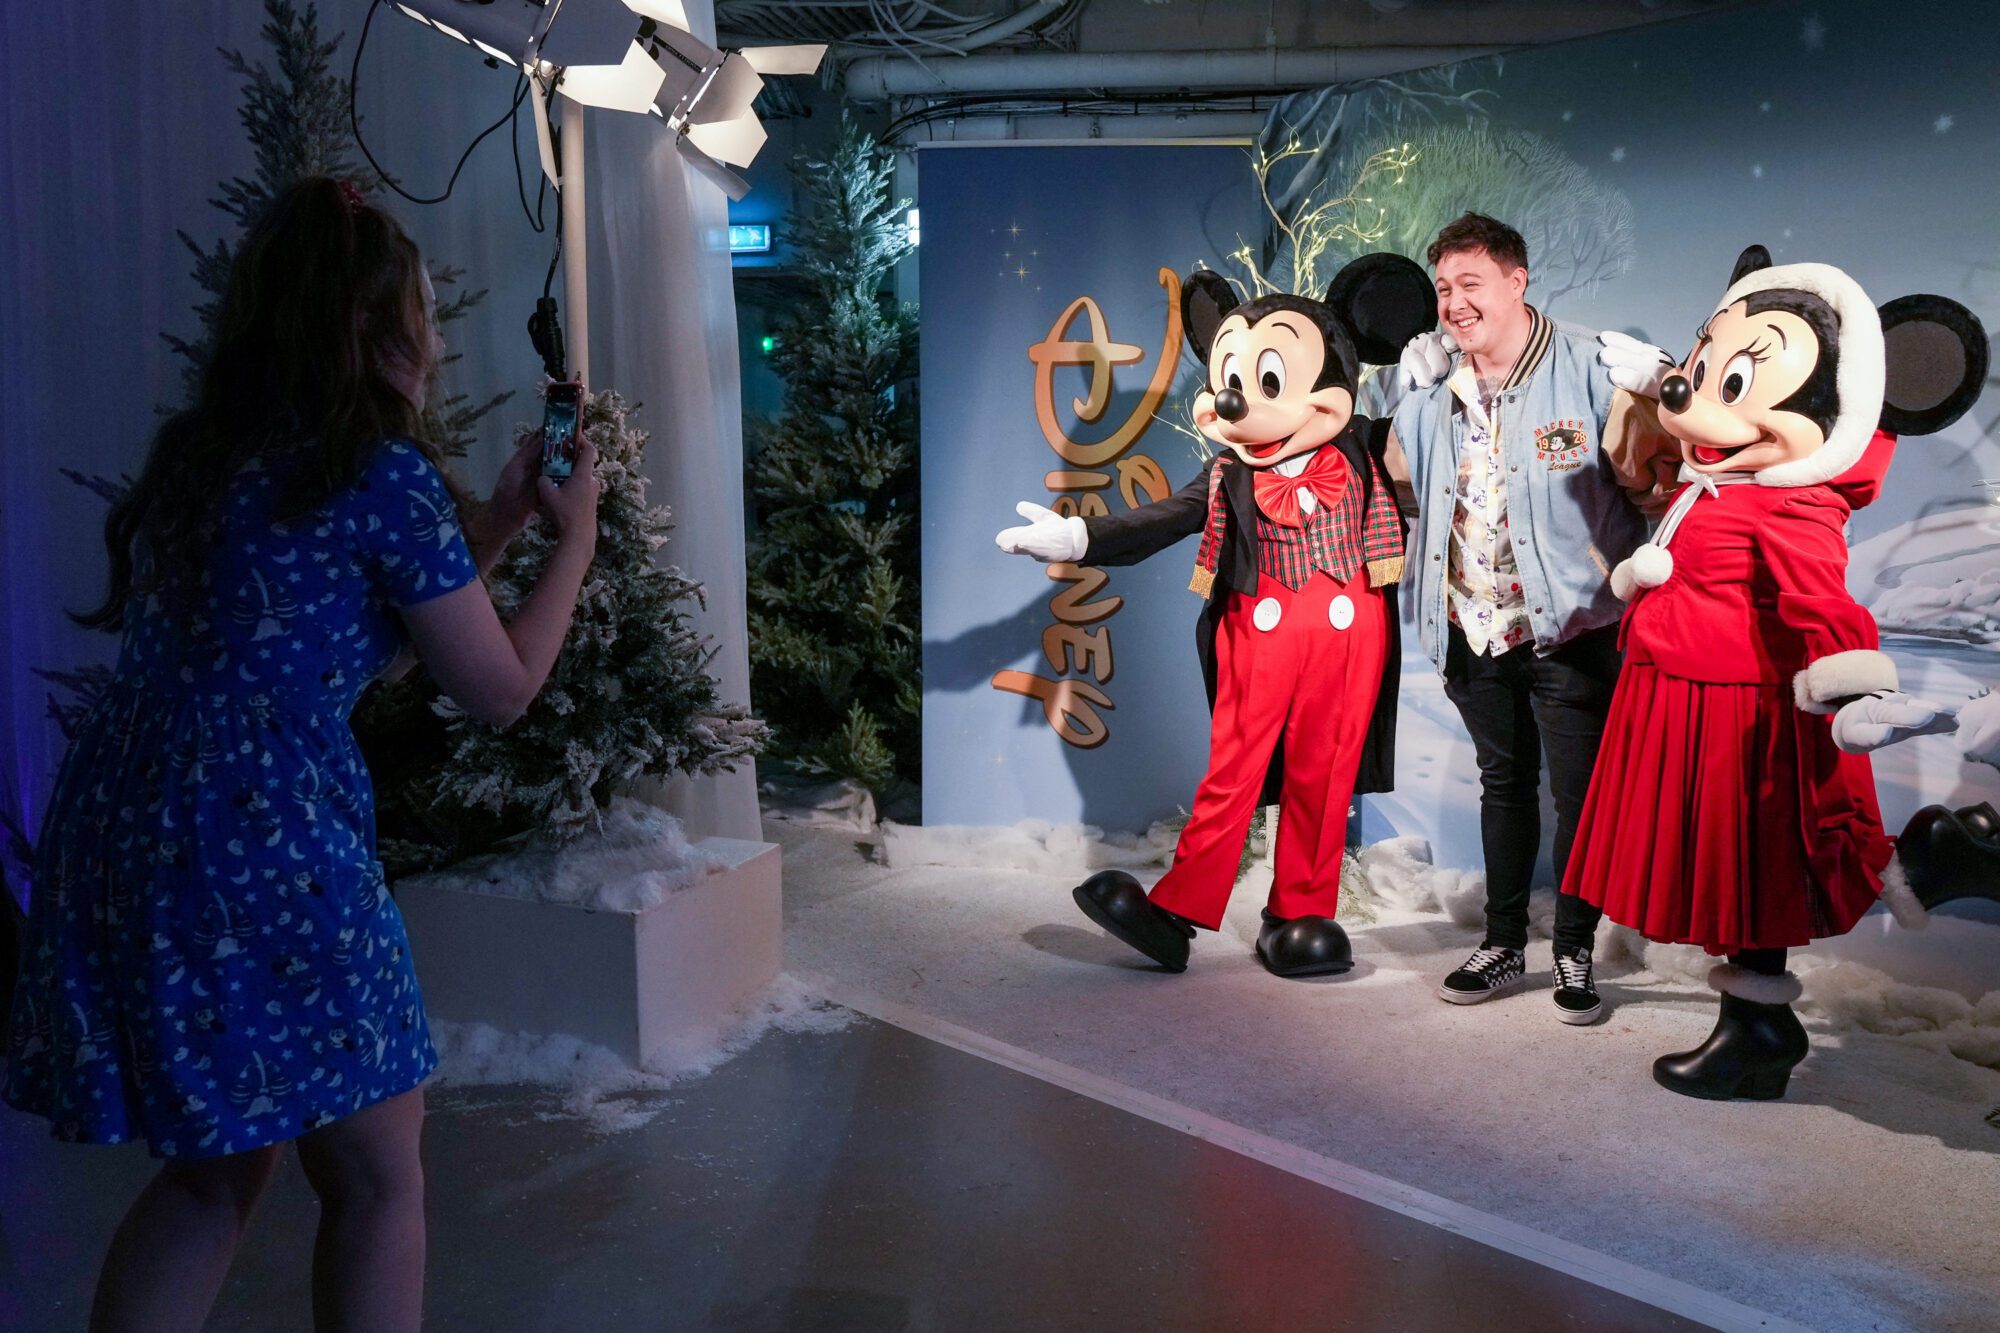 People take photos at Disney's product showcase during Magical Christmas Market in London, Britain November 2, 2022. REUTERS/Maja Smiejkowska/File Photo